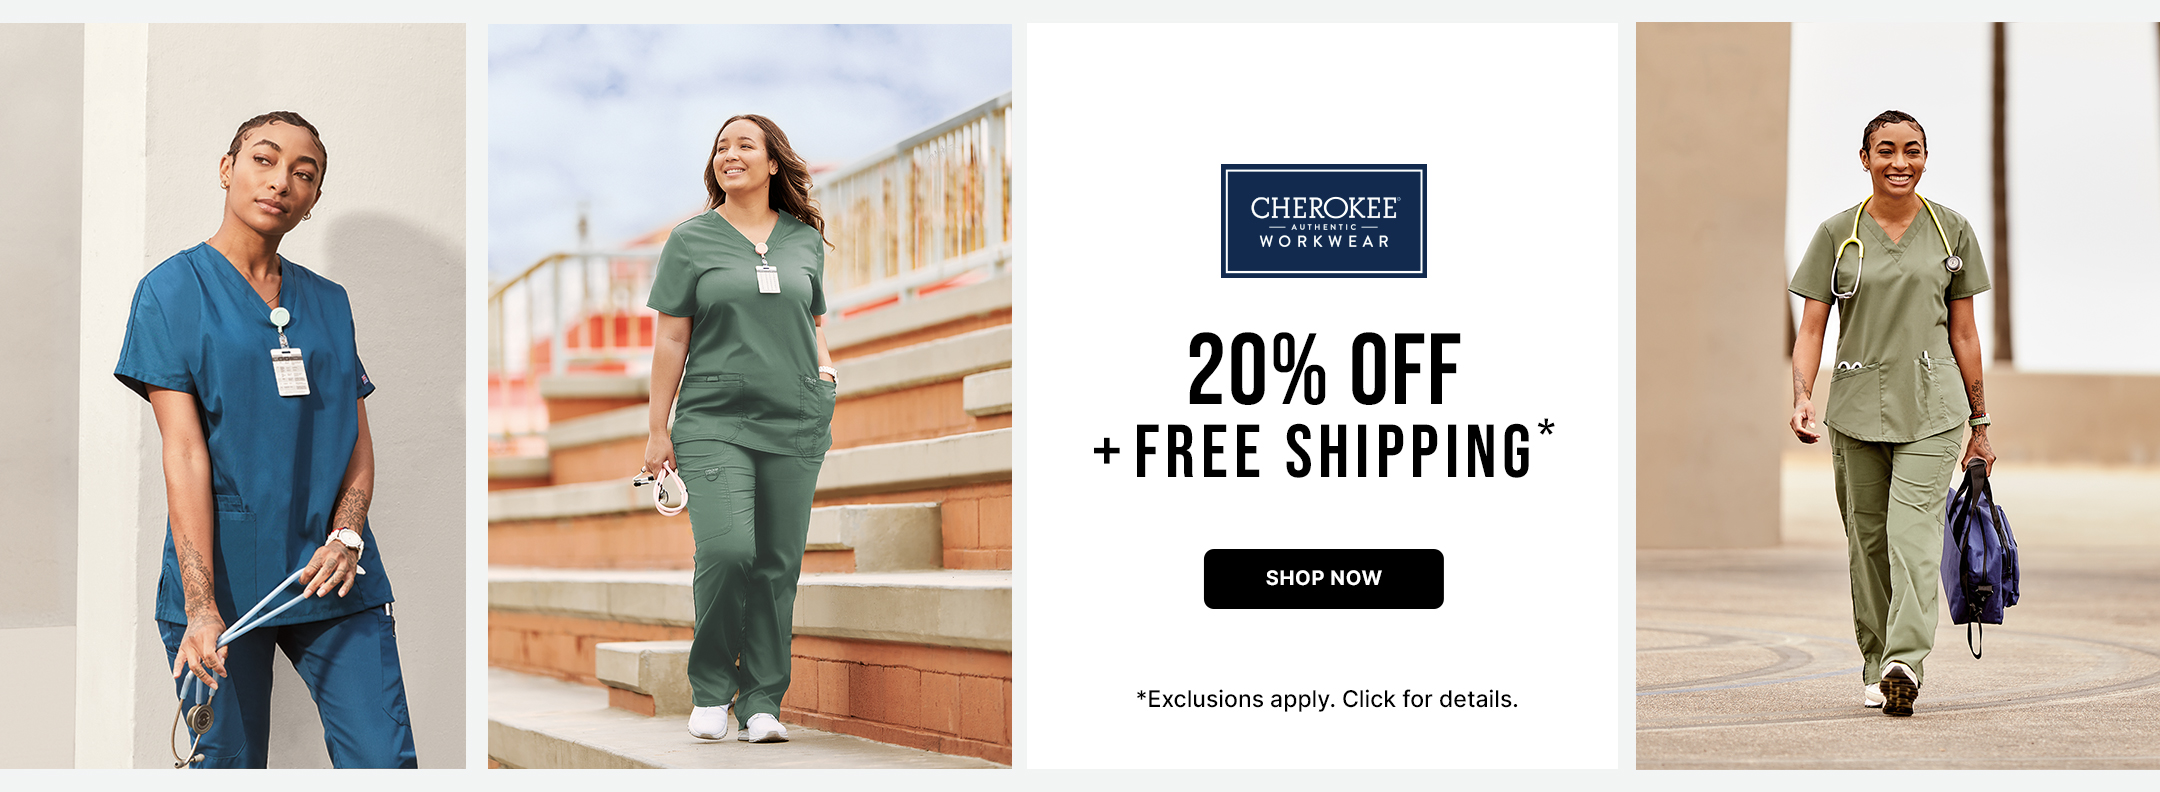 Shop Cherokee Workwear 20% Off